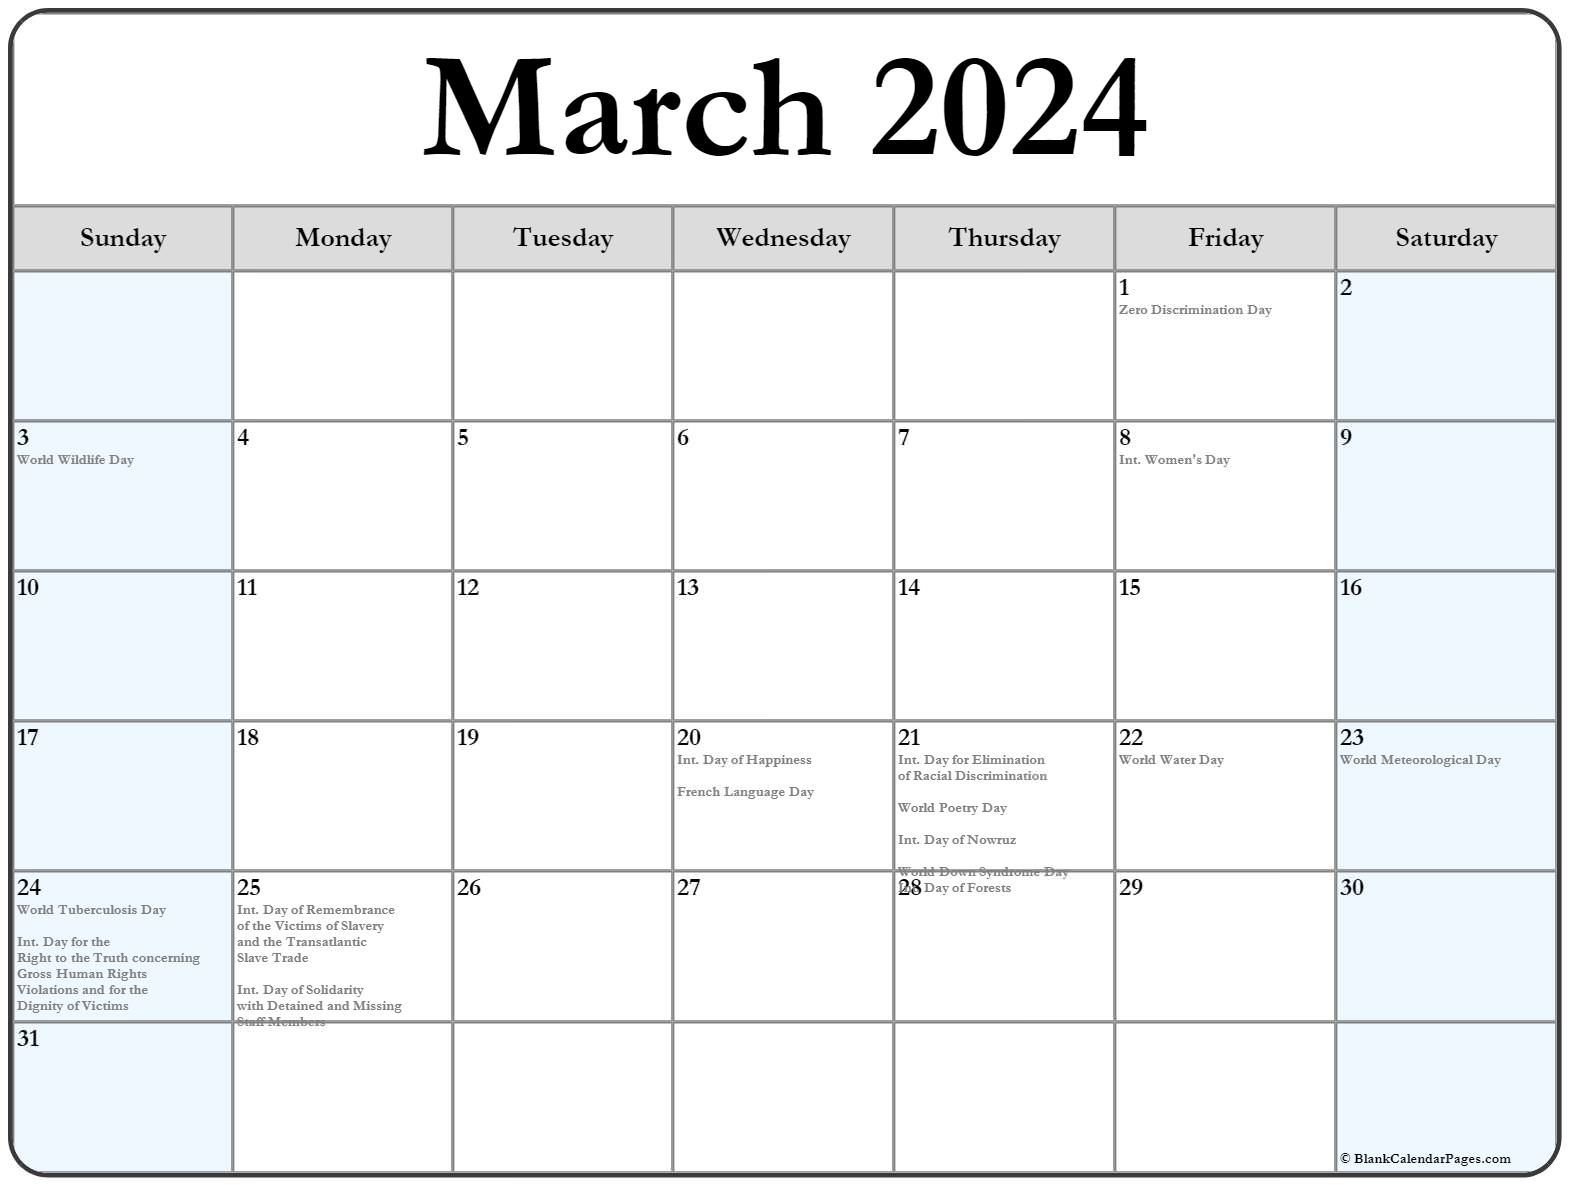 March 2024 Calendar With Events 2024 CALENDAR PRINTABLE